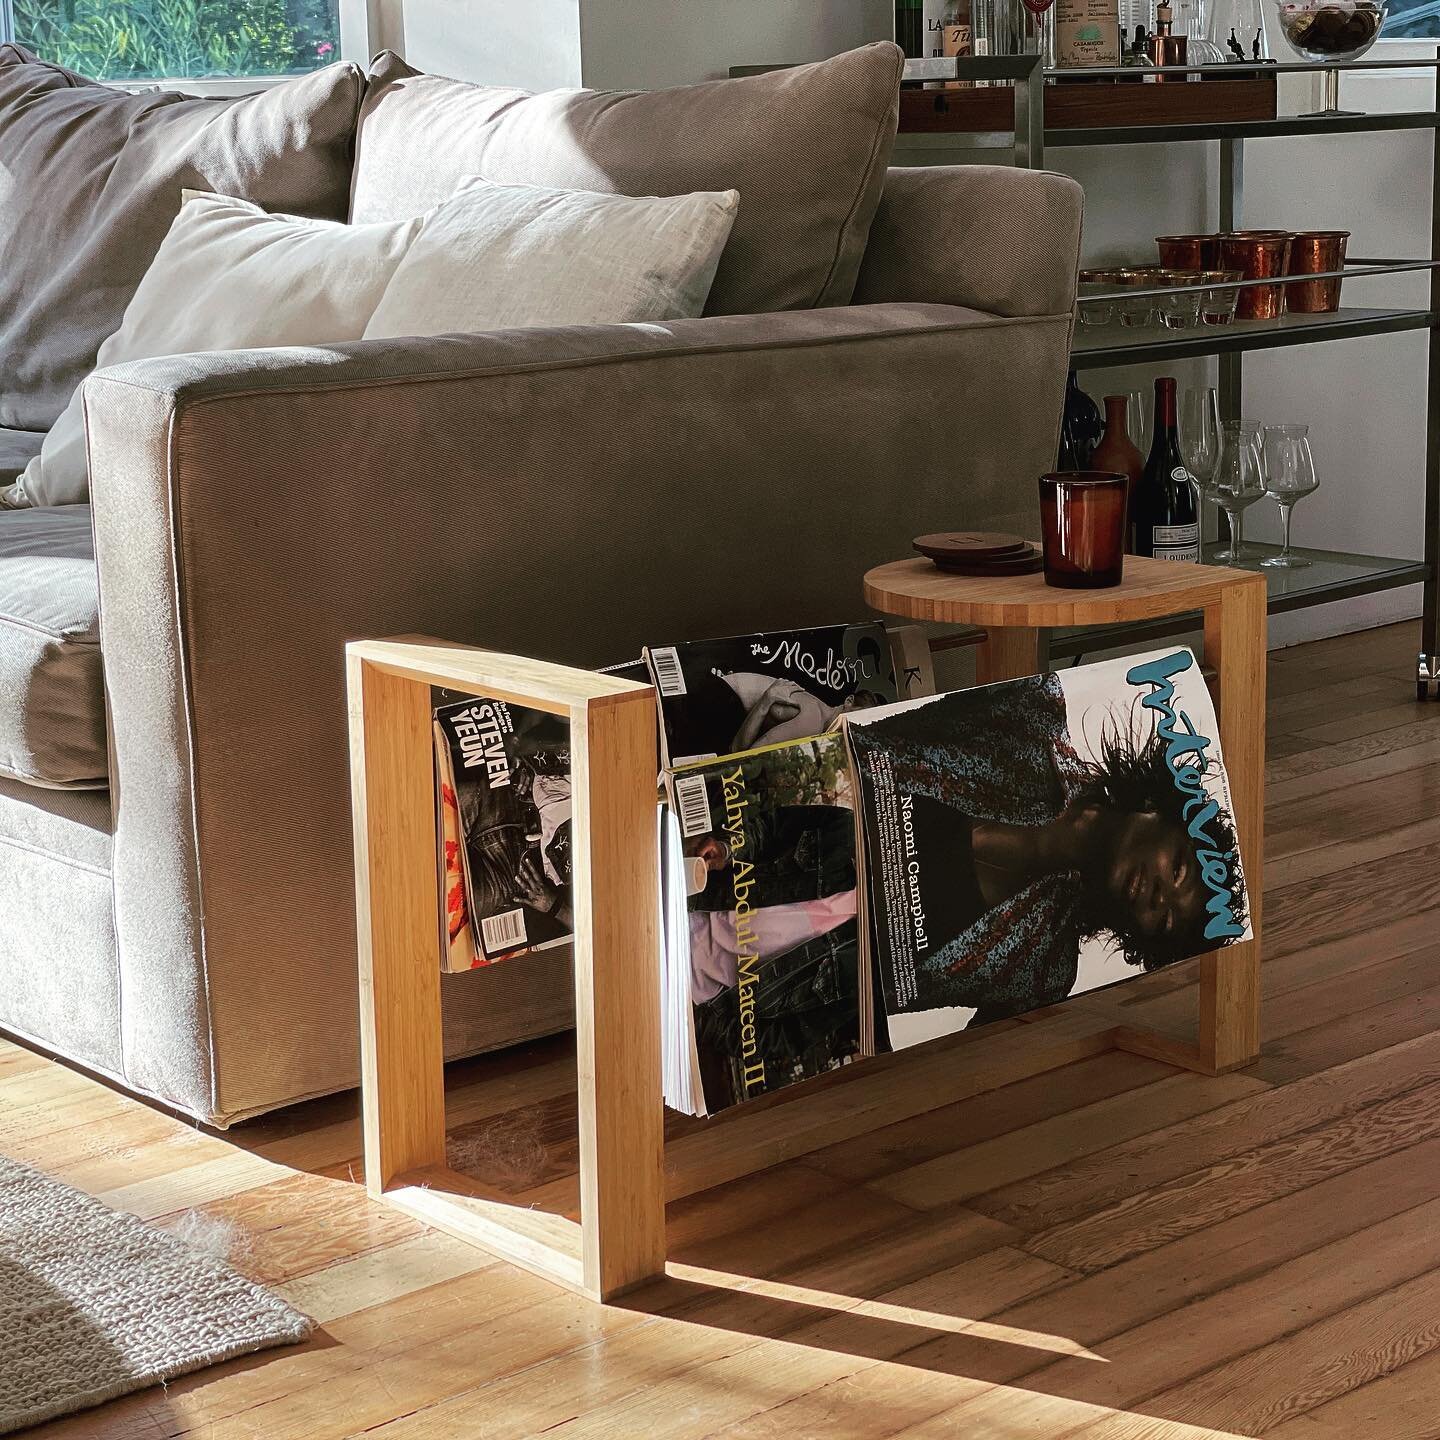 The Magazine Rack looking fresh in that morning light. 

&mdash;
H
+
H
&mdash;
#furniture #design #woodworking #sustainable #interiordesign #bamboo #brass ~ @iknowbryan @meganlukeedwards